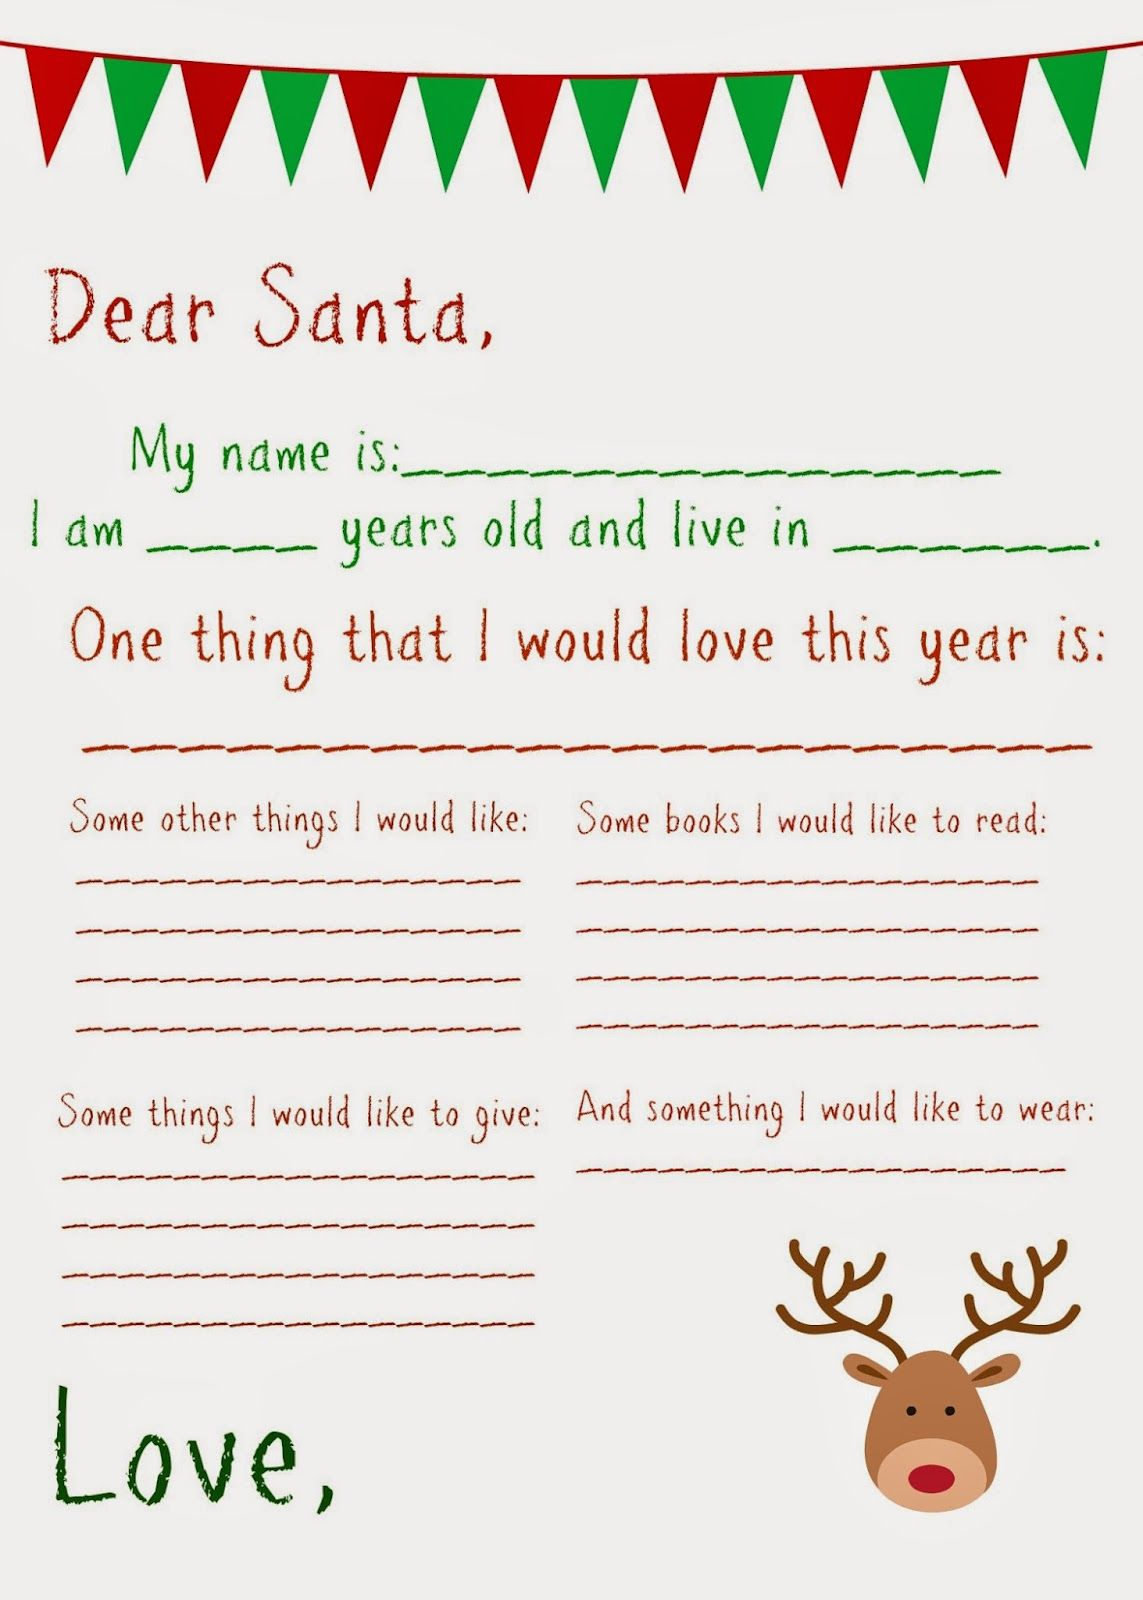 Santa Reply Letter Template - Dear Santa Letter Free Printable